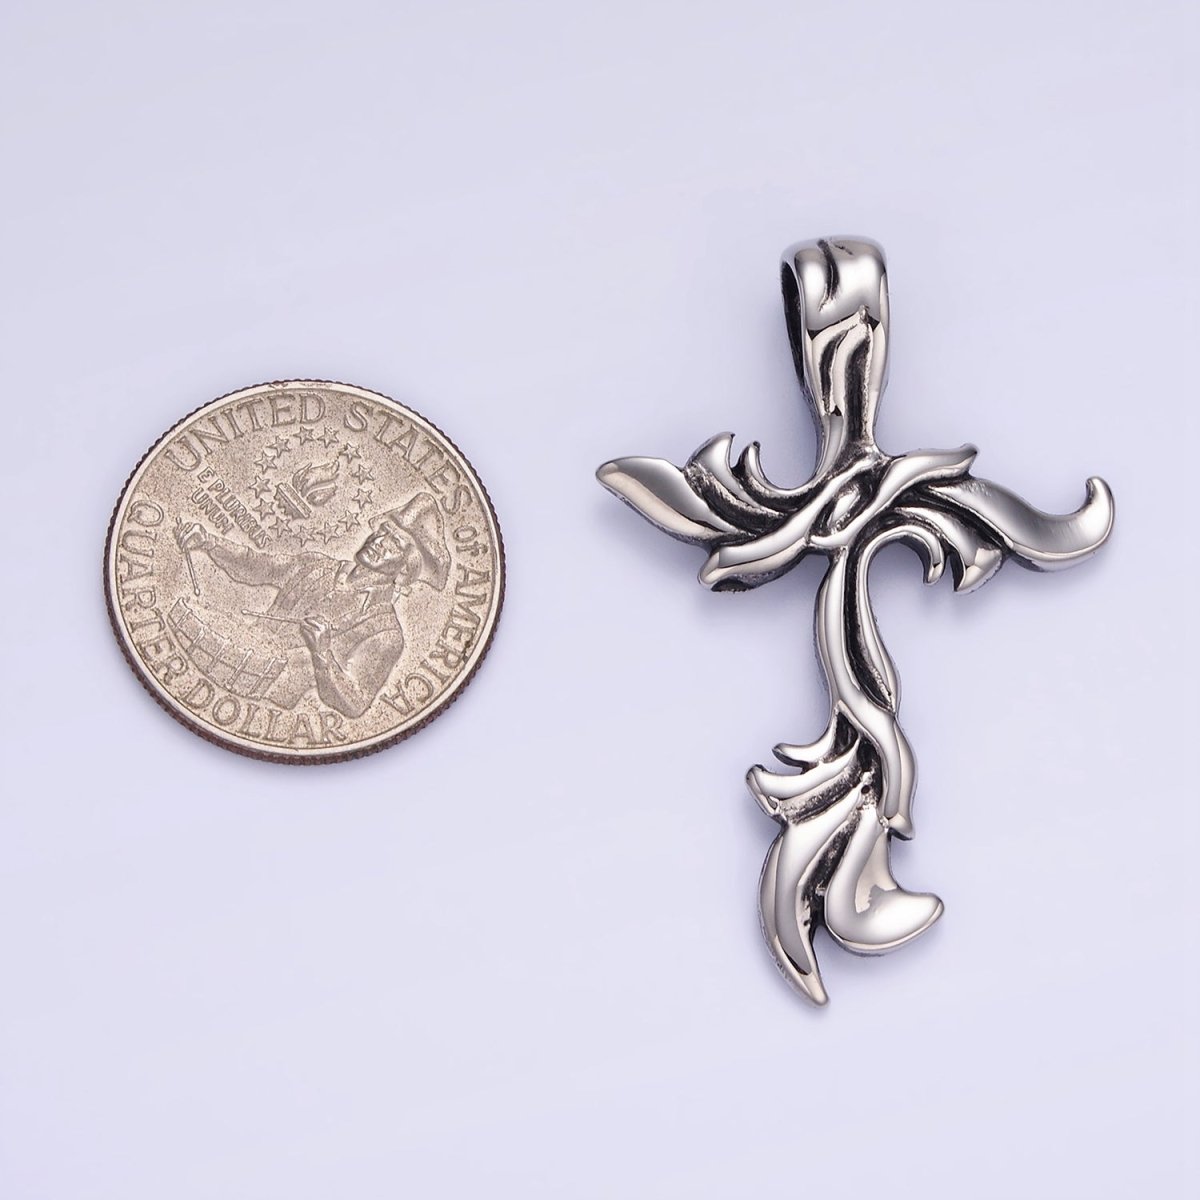 Stainless Steel 48mm Artisan Cross Religious Oxidized Silver Pendant | P1408 - DLUXCA